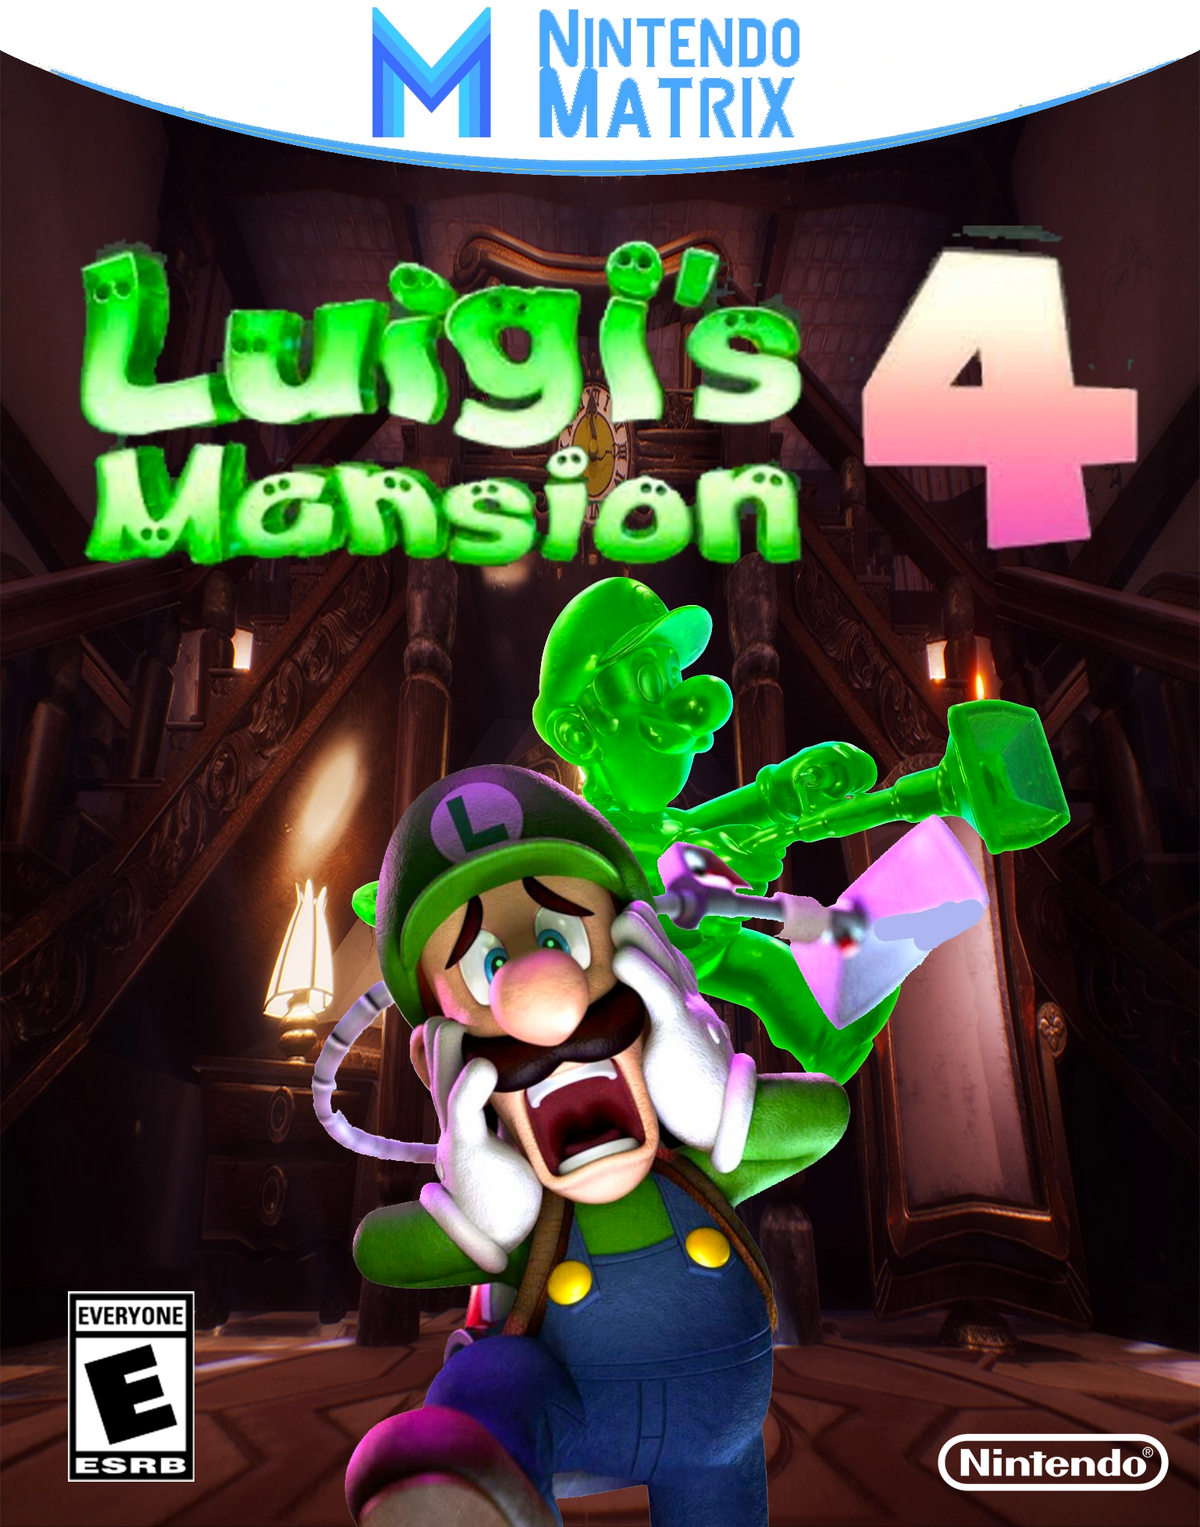 Nintendo's Big Plan For Luigi's Mansion 4? 